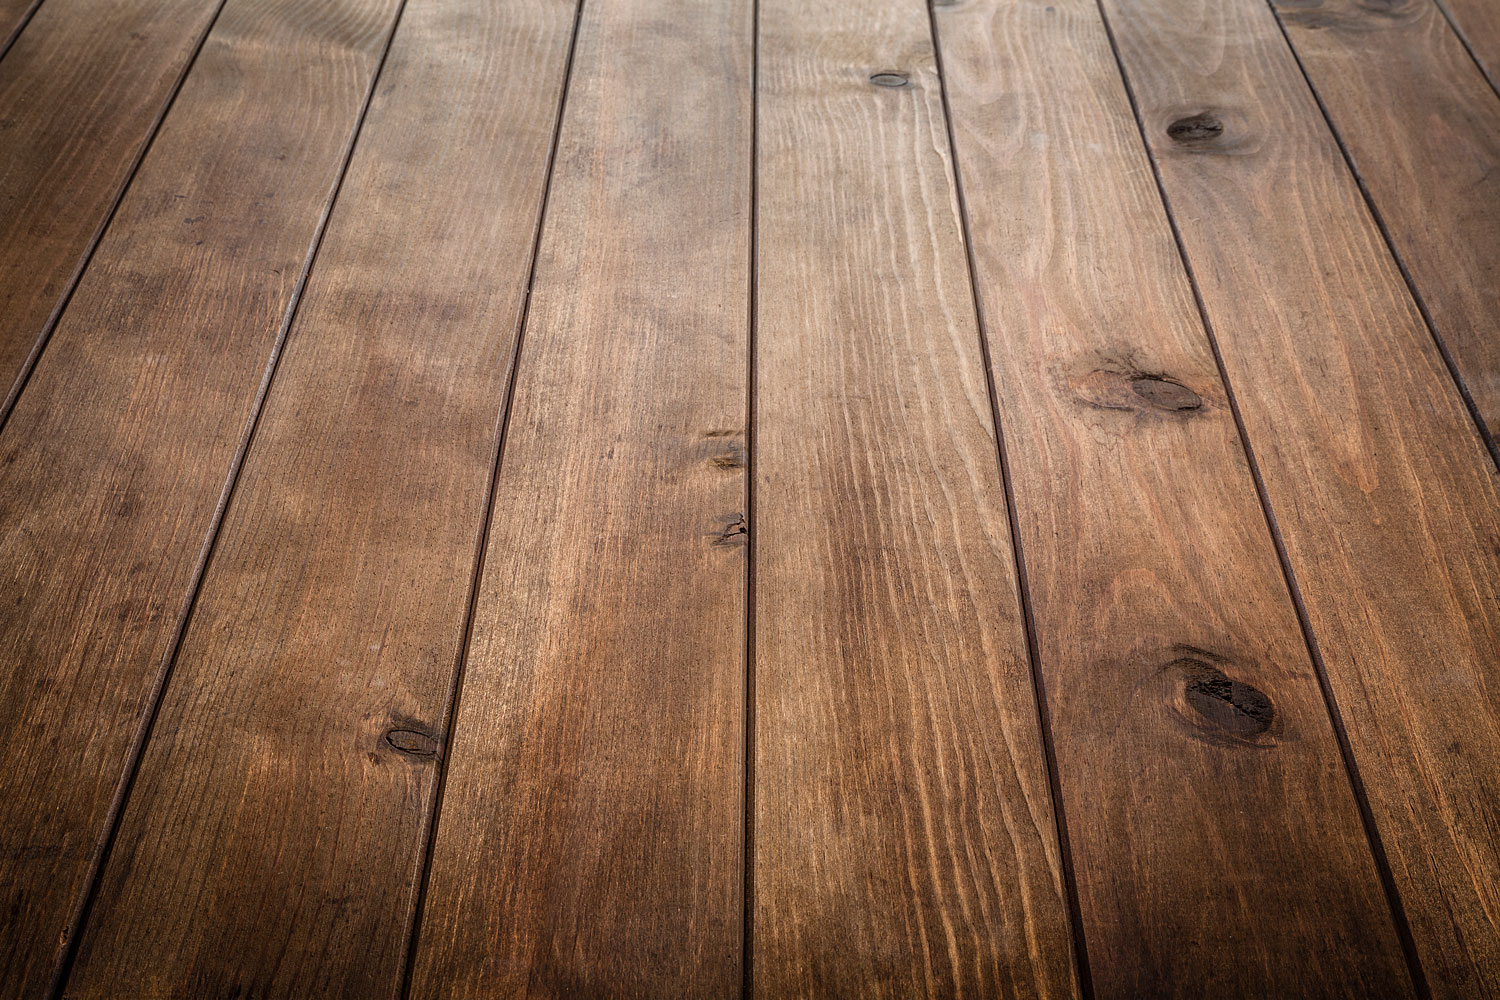 Wooden hardwood flooring photographed up close